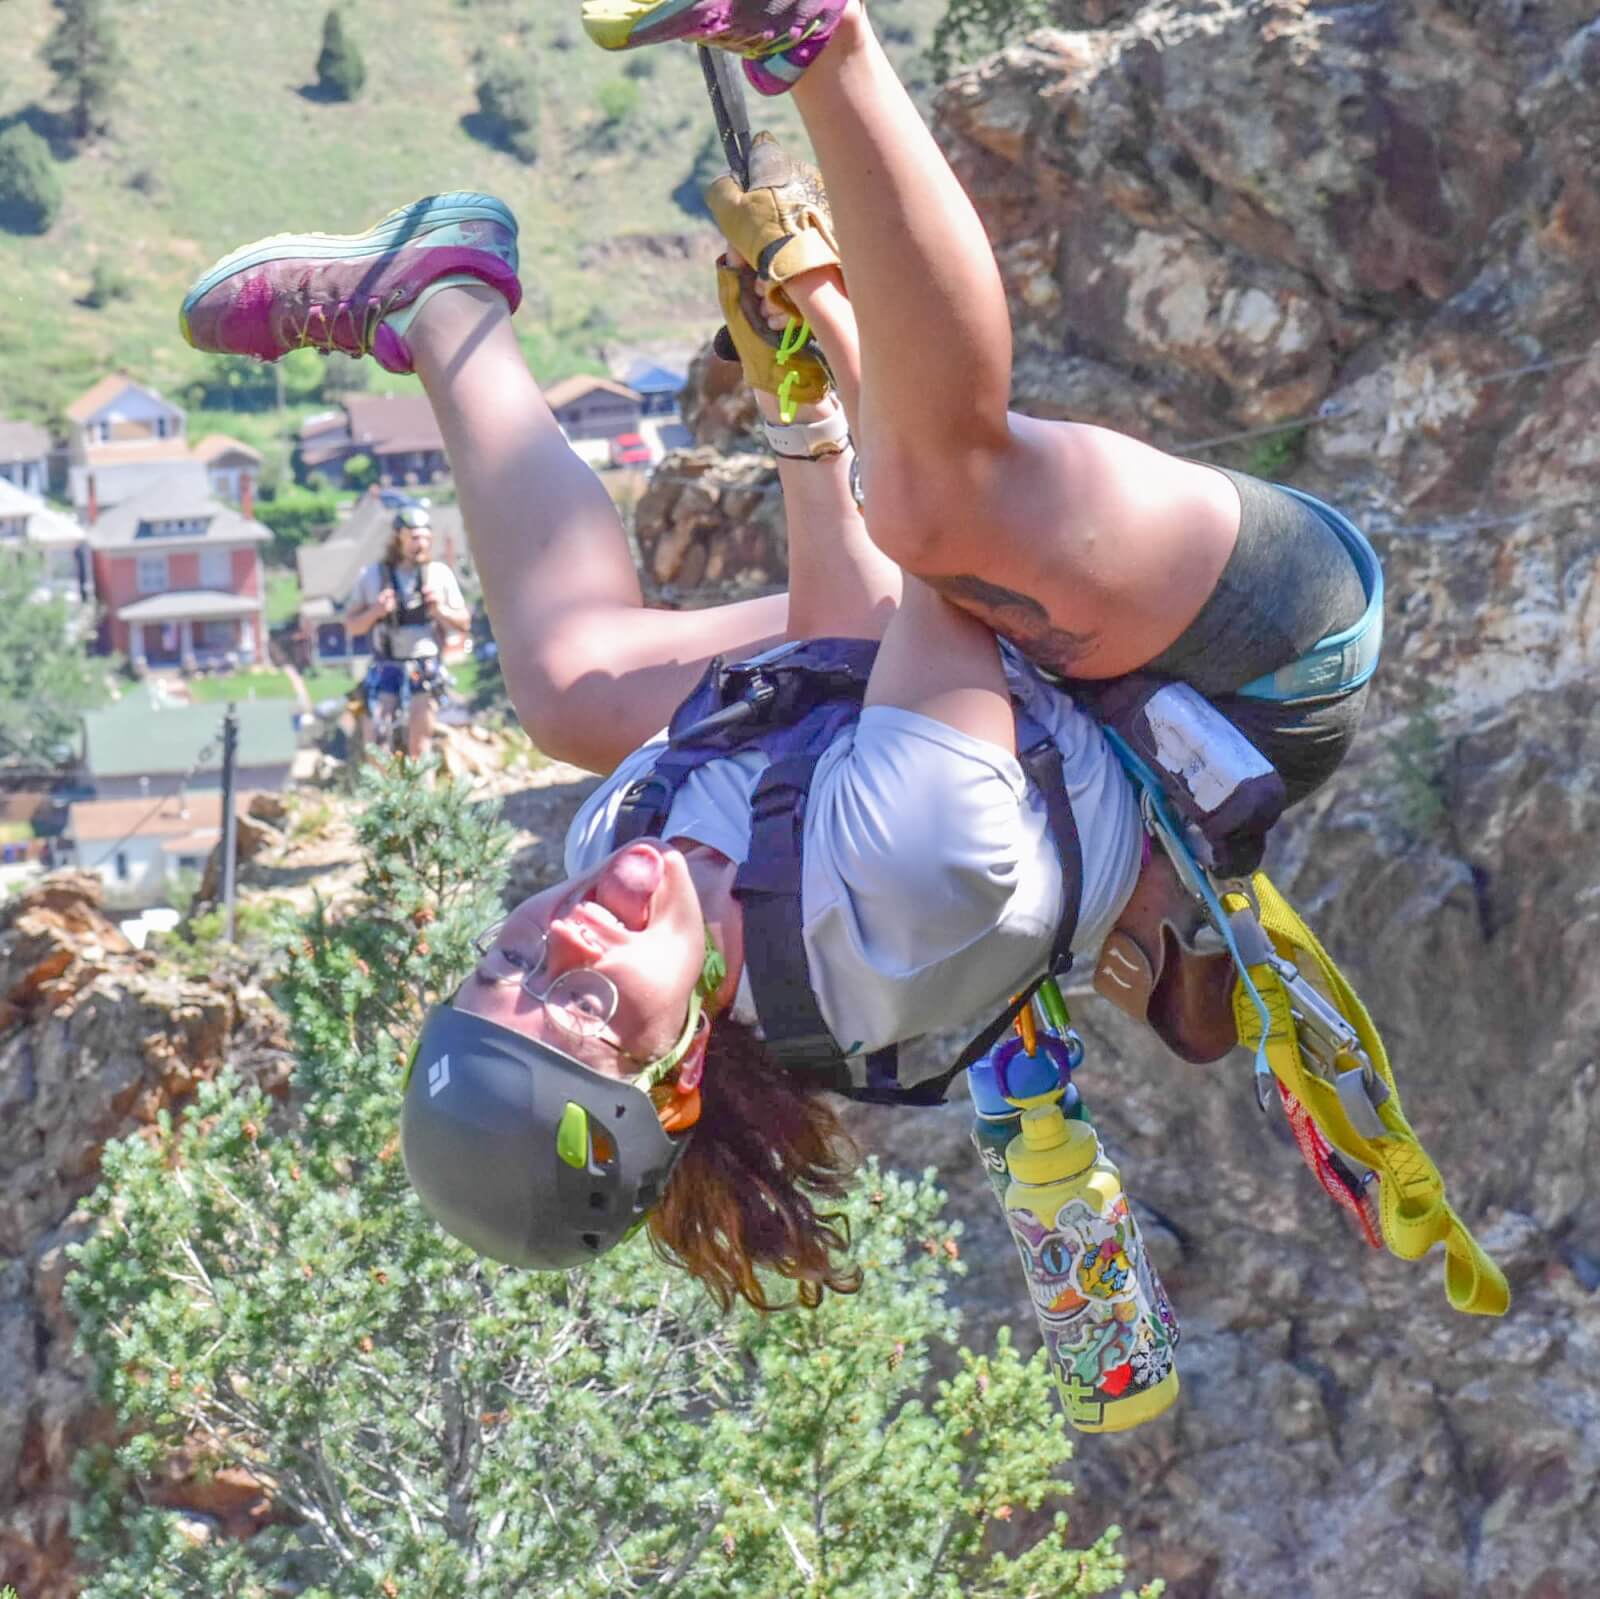 Jess Reynolds, Zipline Guide in Idaho Springs